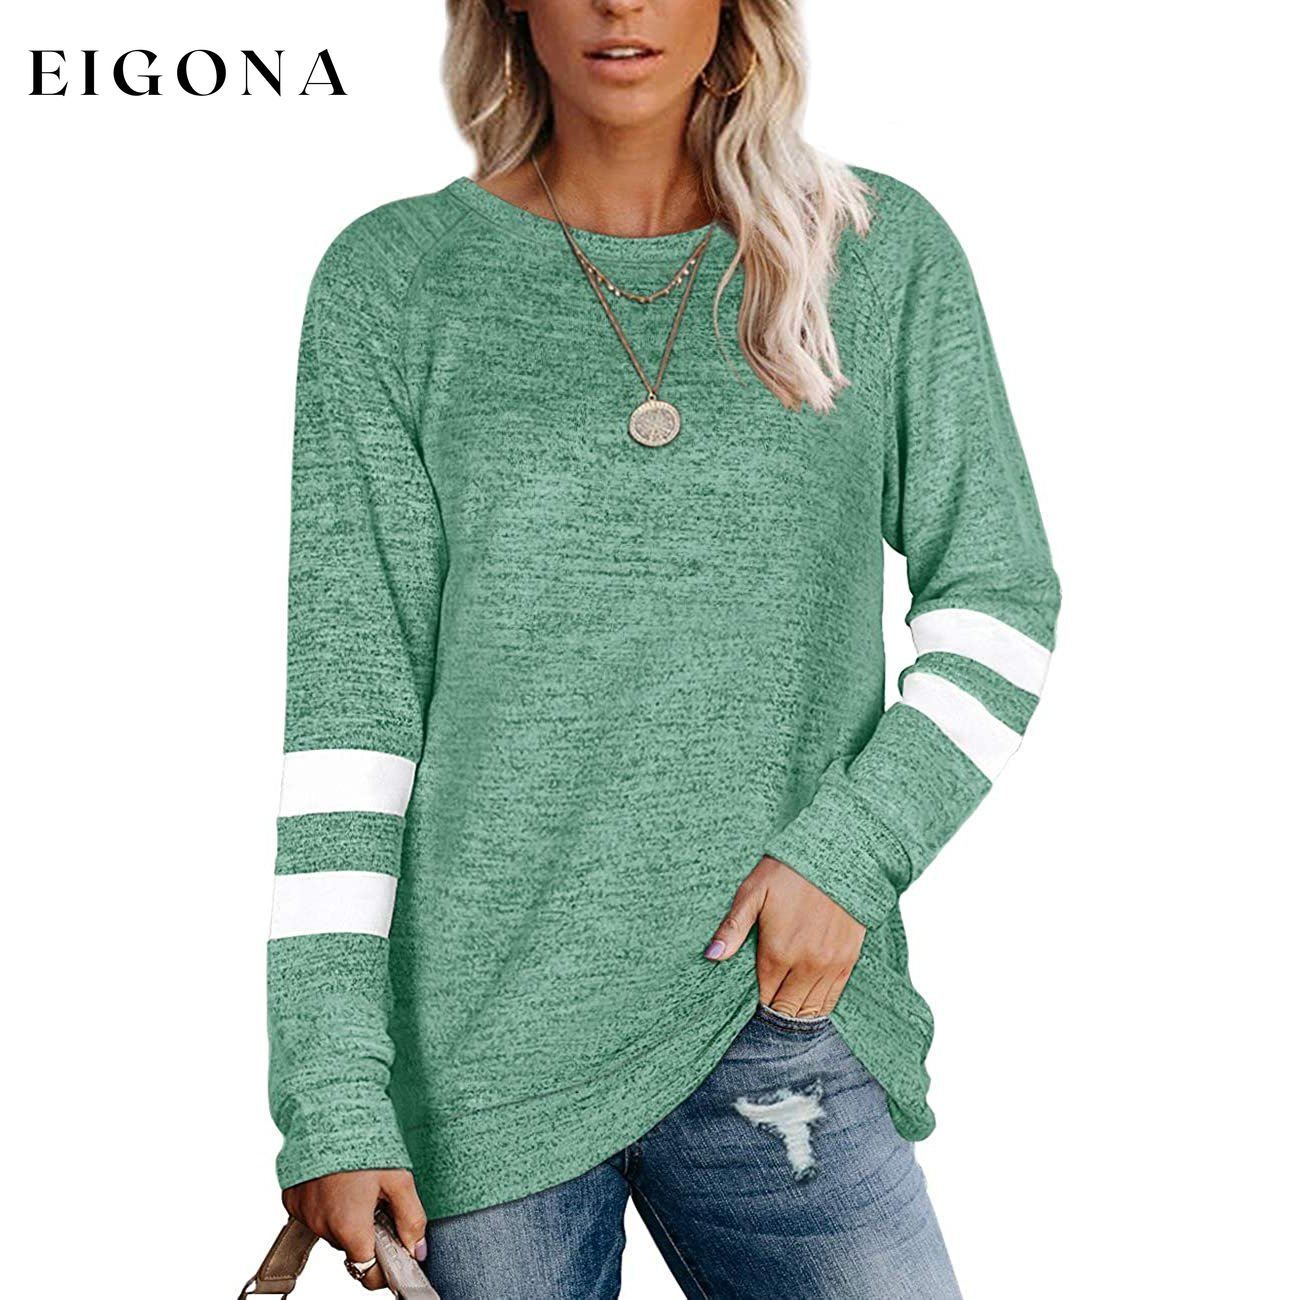 Women's Crewneck Sweatshirts Long Sleeve Sweaters Tunic Tops Green clothes refund_fee:1200 tops